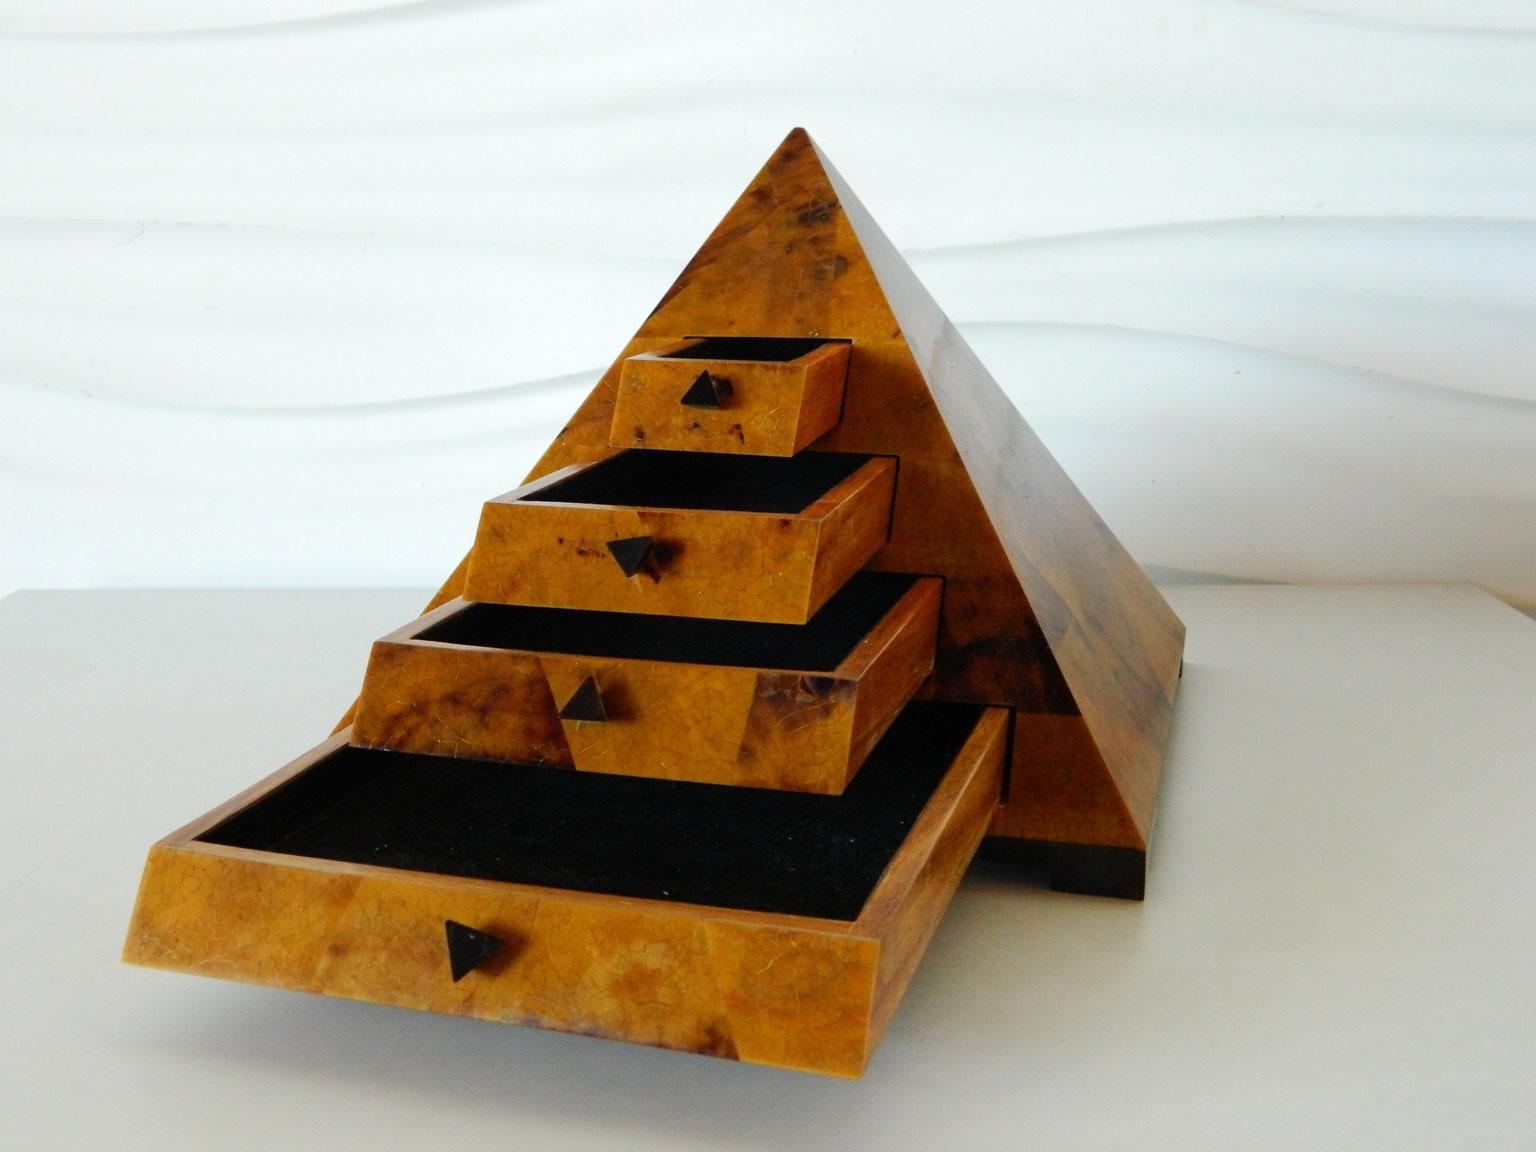 20th Century Decorative Pyramid Box in the Style of Maitland Smith